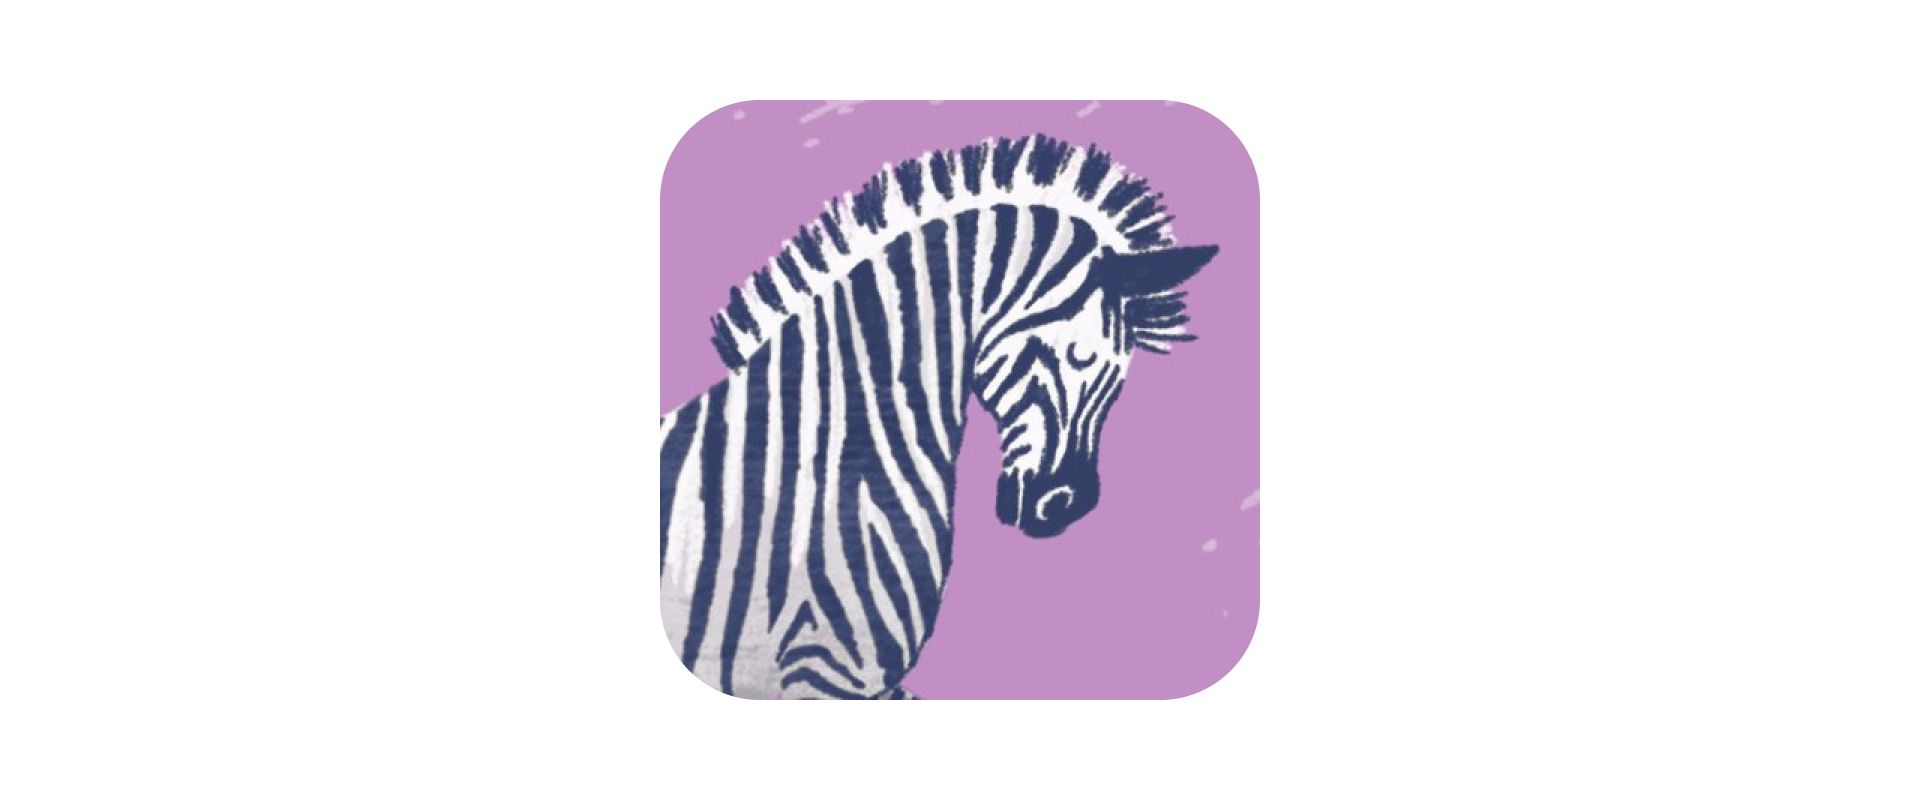 Zebras Unite